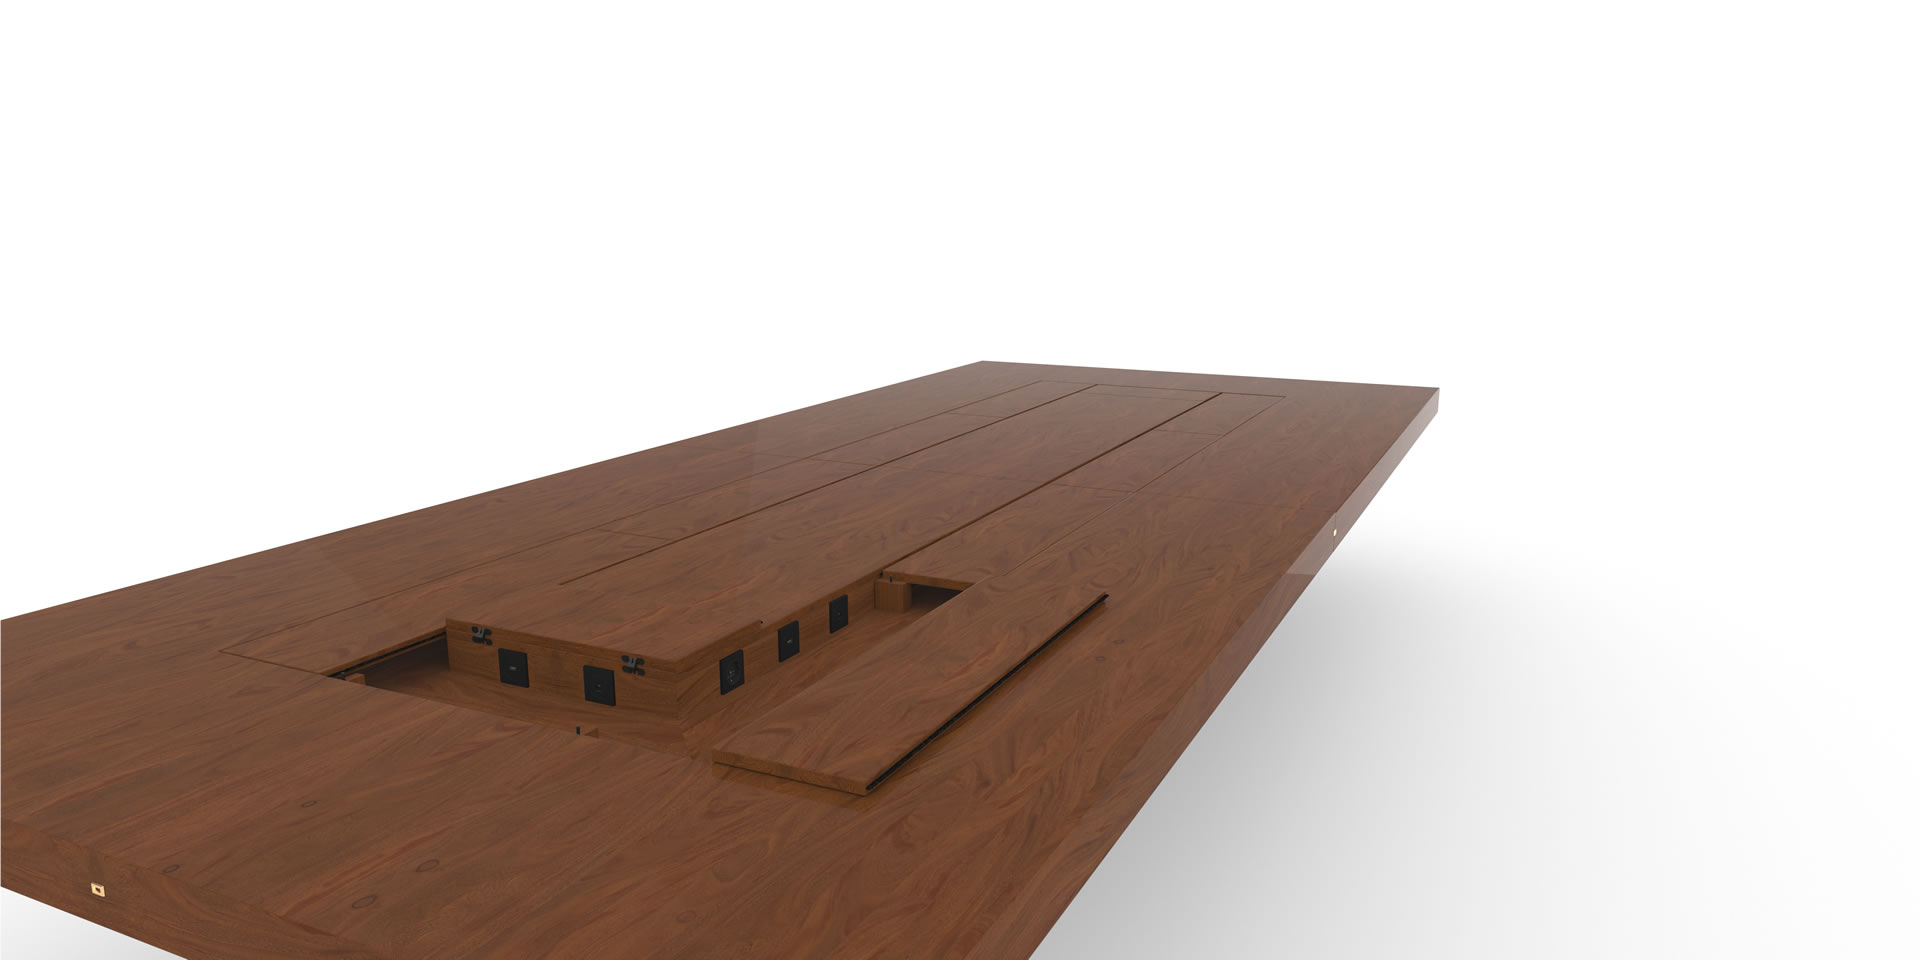 FELIX SCHWAKE CONFERENCE TABLE II V large Anlage precious wood mahogany customized bespoke Inside View